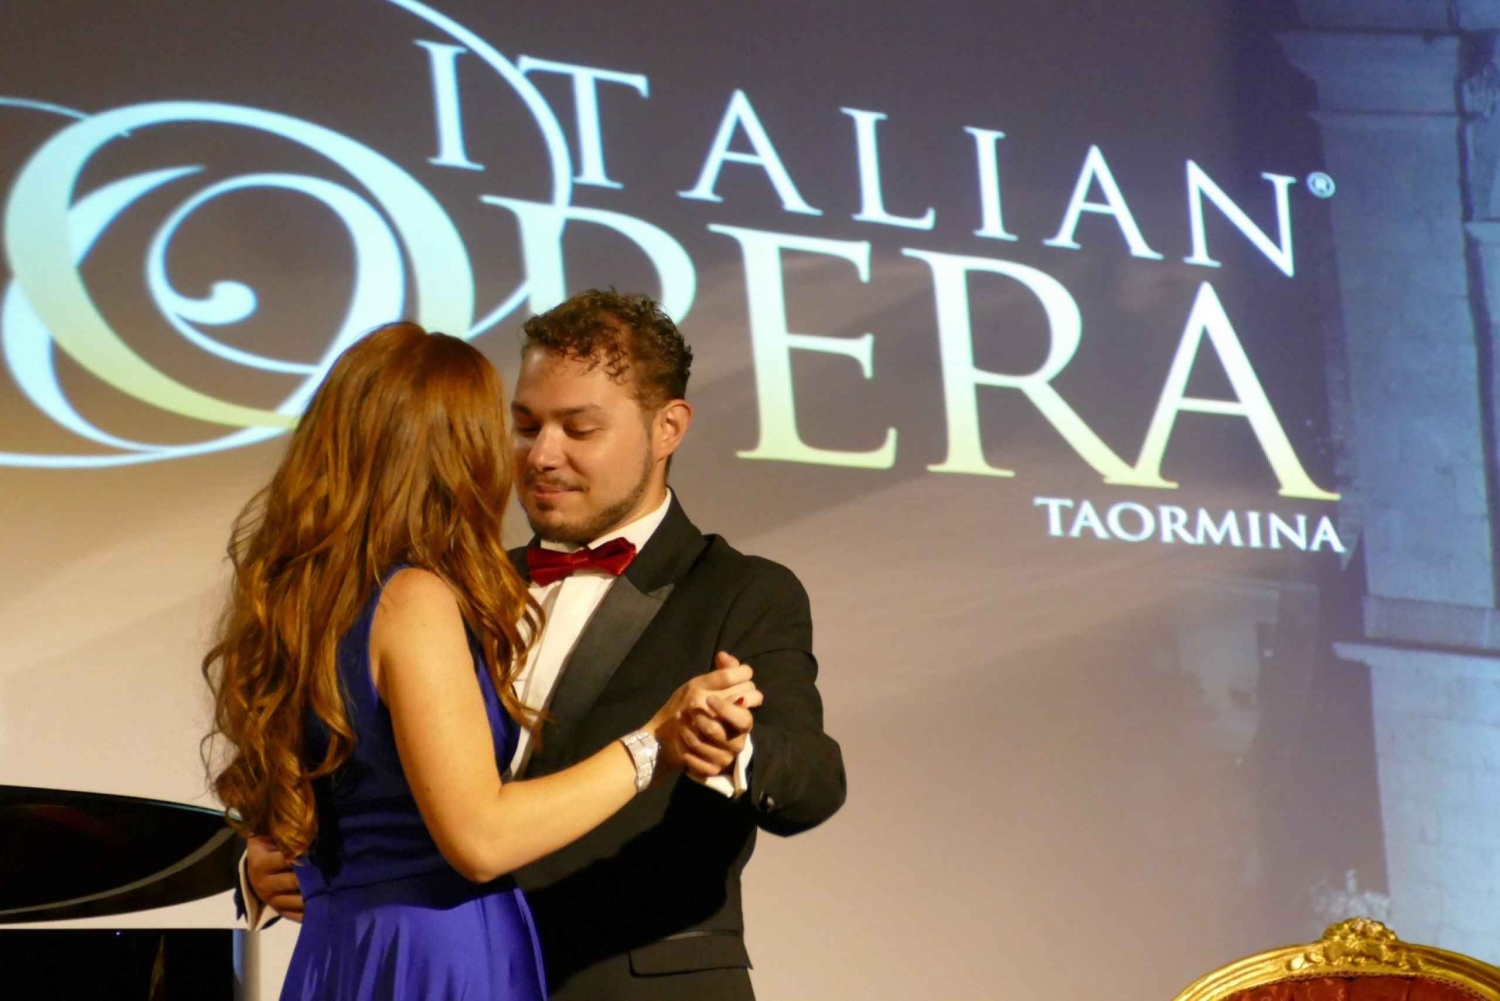 Italian Opera Taormina in the Nazarena Theater